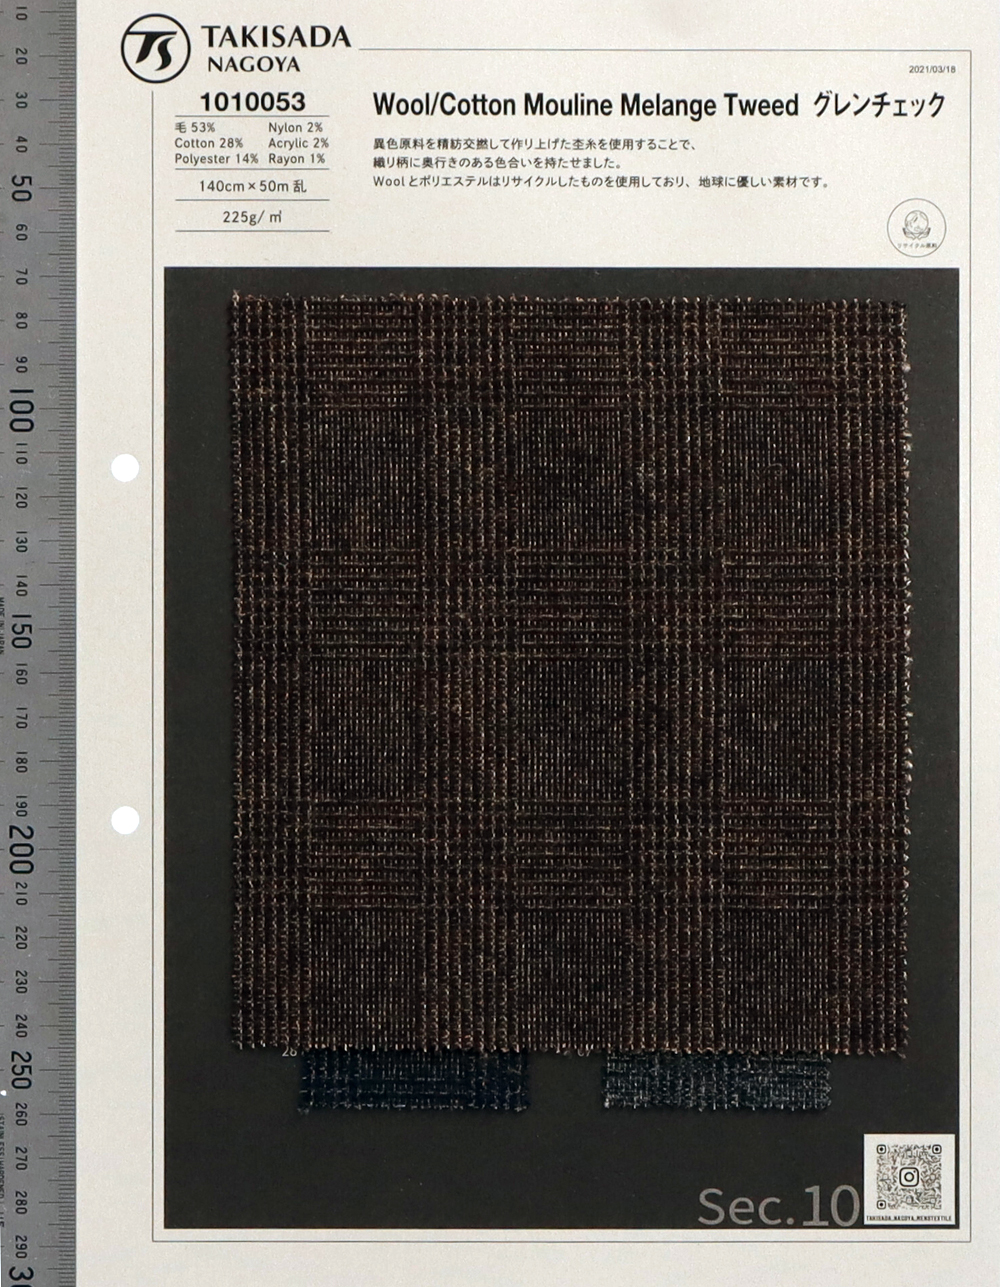 1010053 RE: NEWOOL® Lana / Algodón Melange Tweed Glen Check[Fabrica Textil] Takisada Nagoya